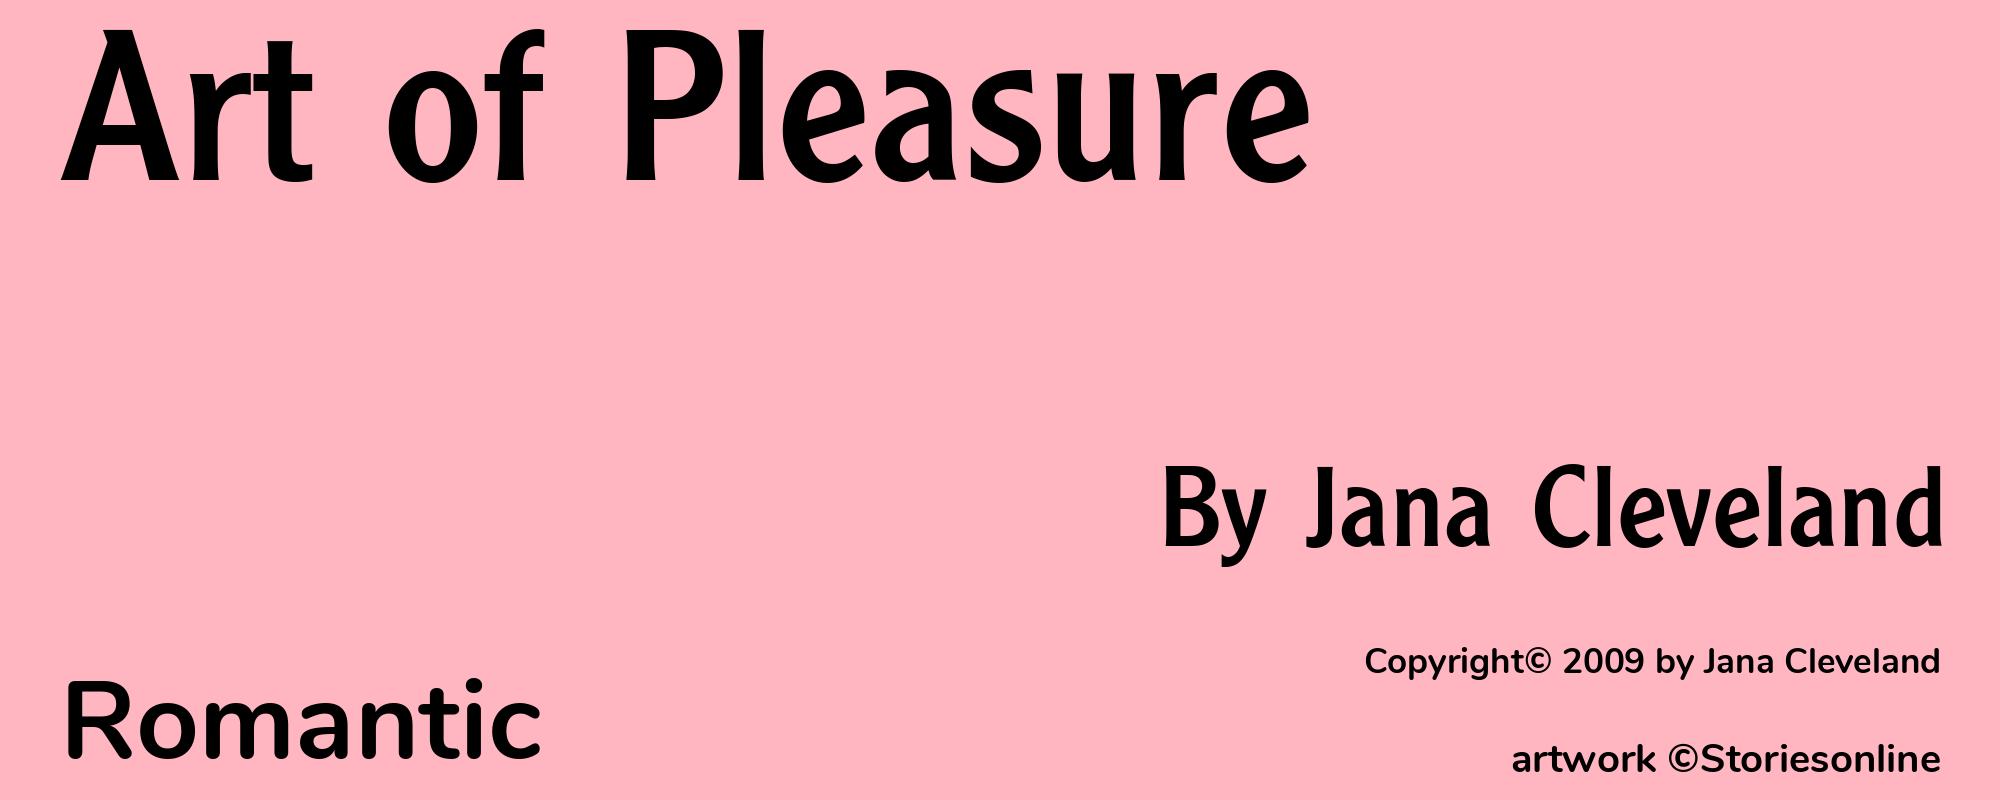 Art of Pleasure - Cover